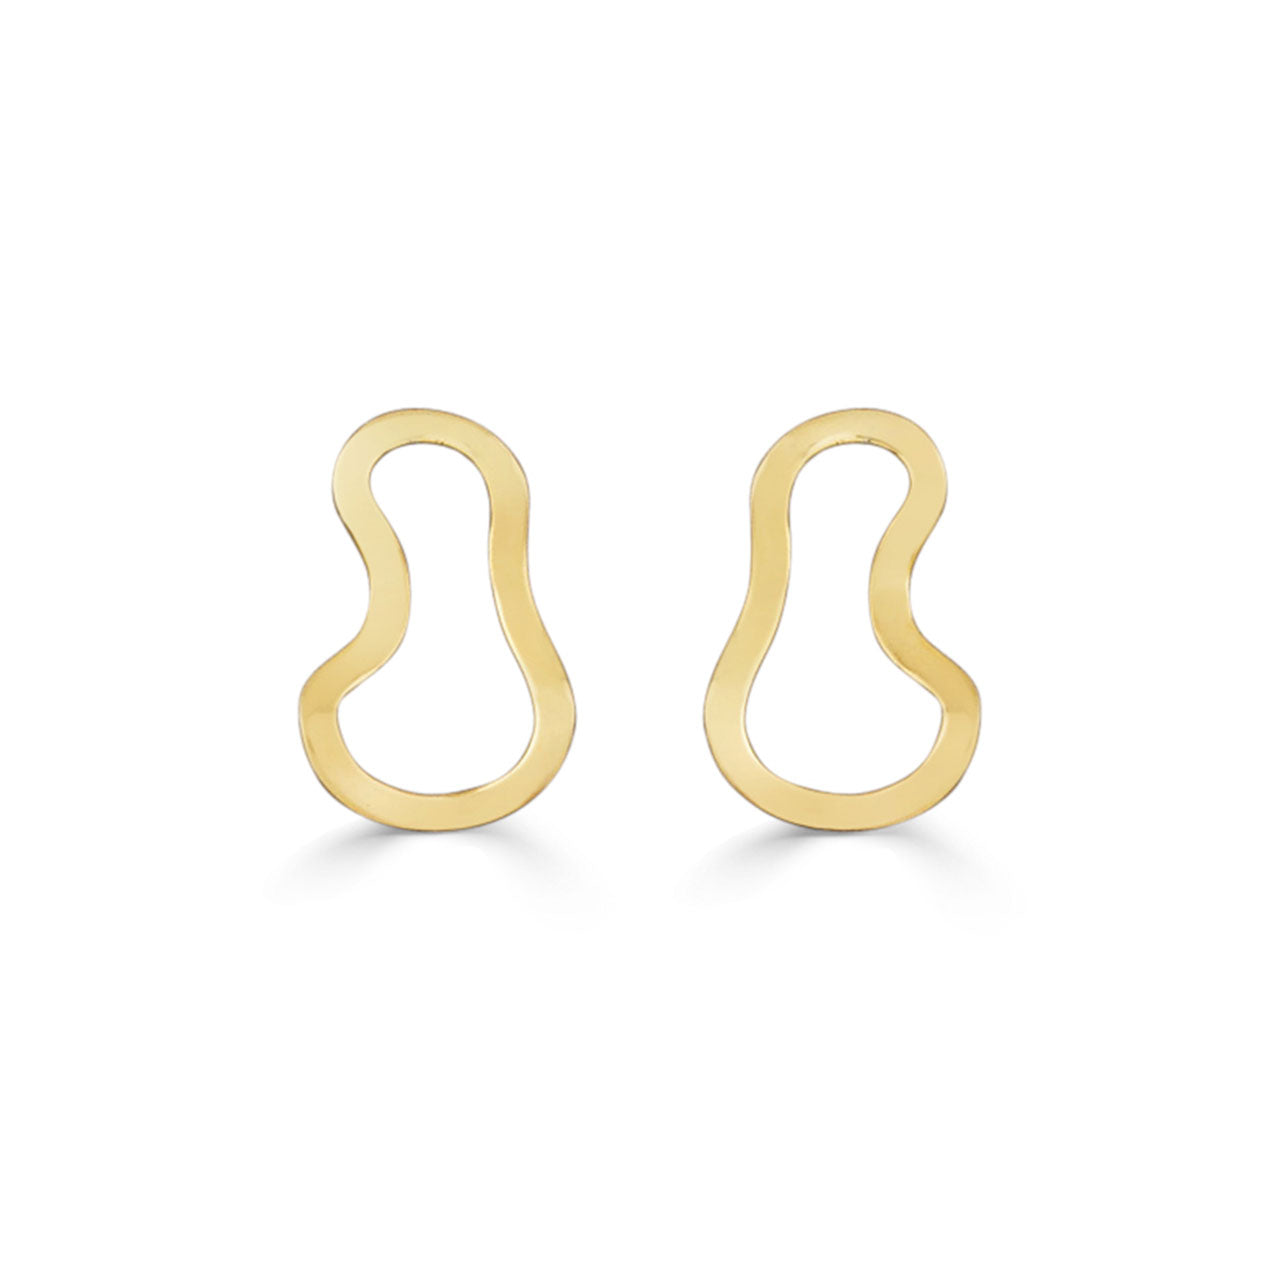 Fara Petite Earrings - (A2451)